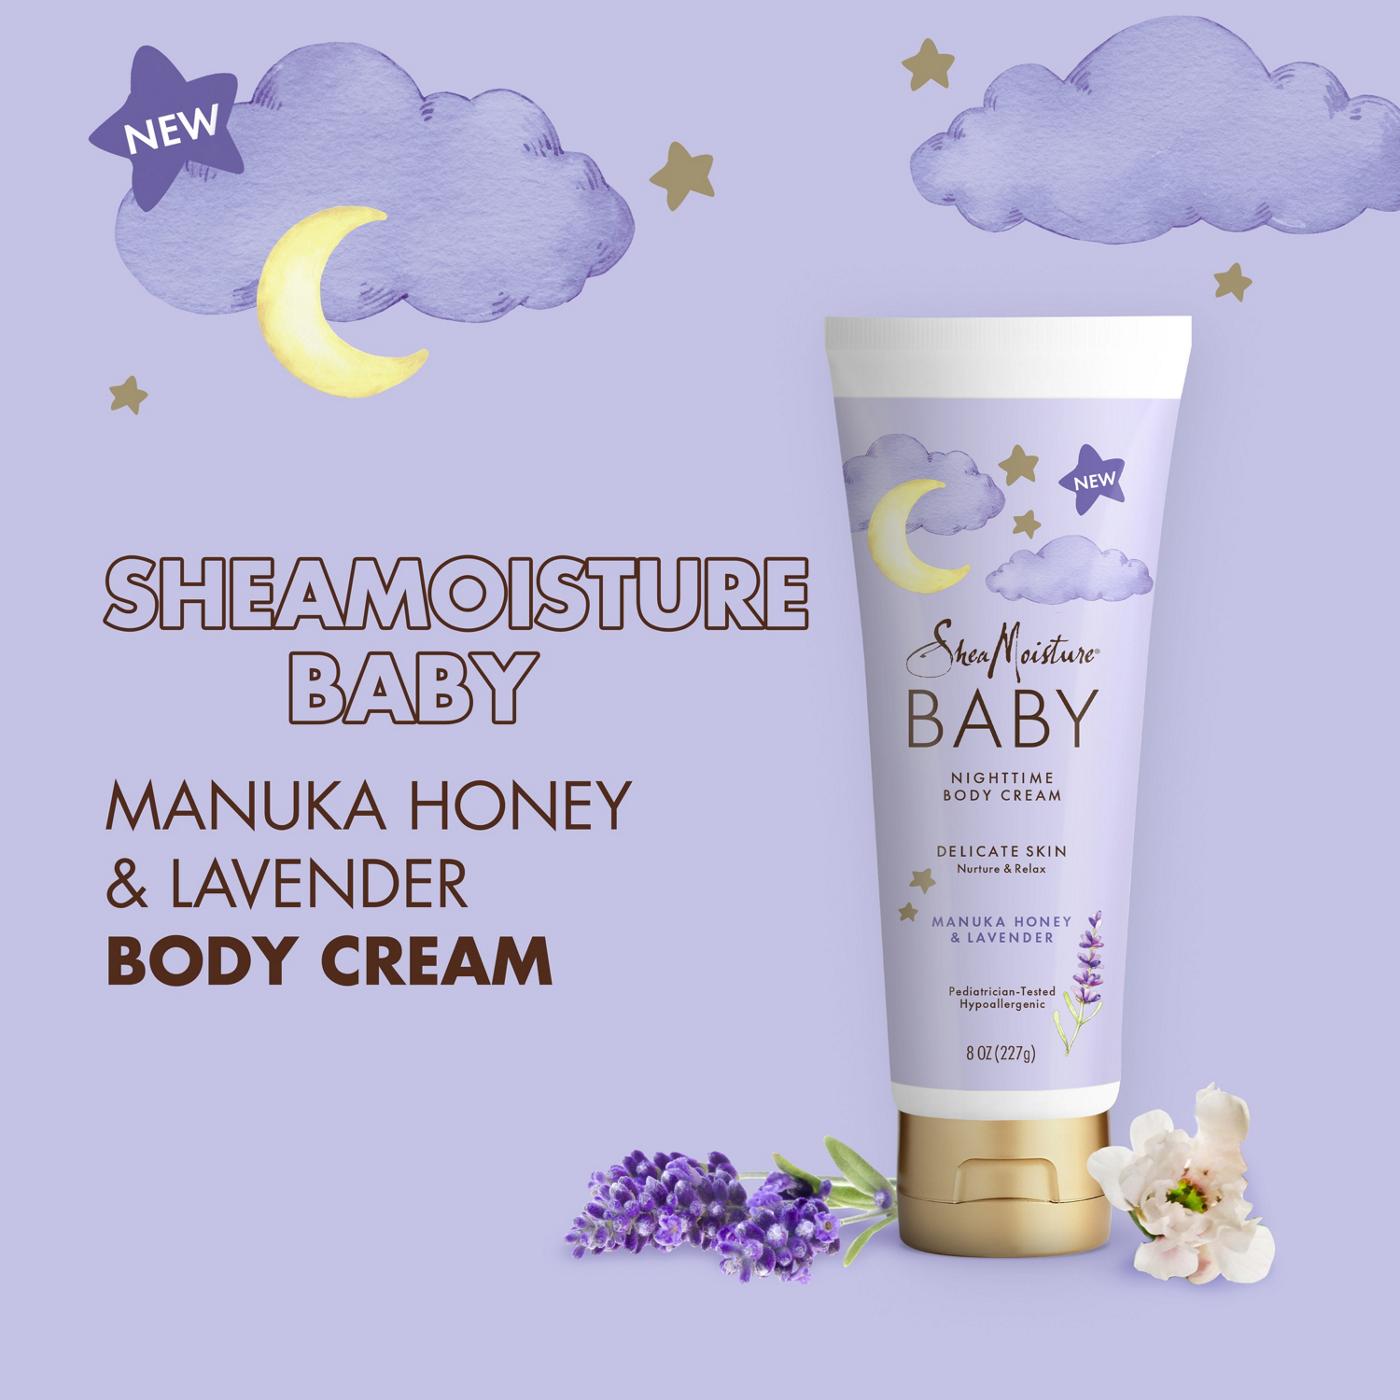 SheaMoisture Baby Nighttime Body Cream - Manuka Honey & Lavender; image 3 of 6